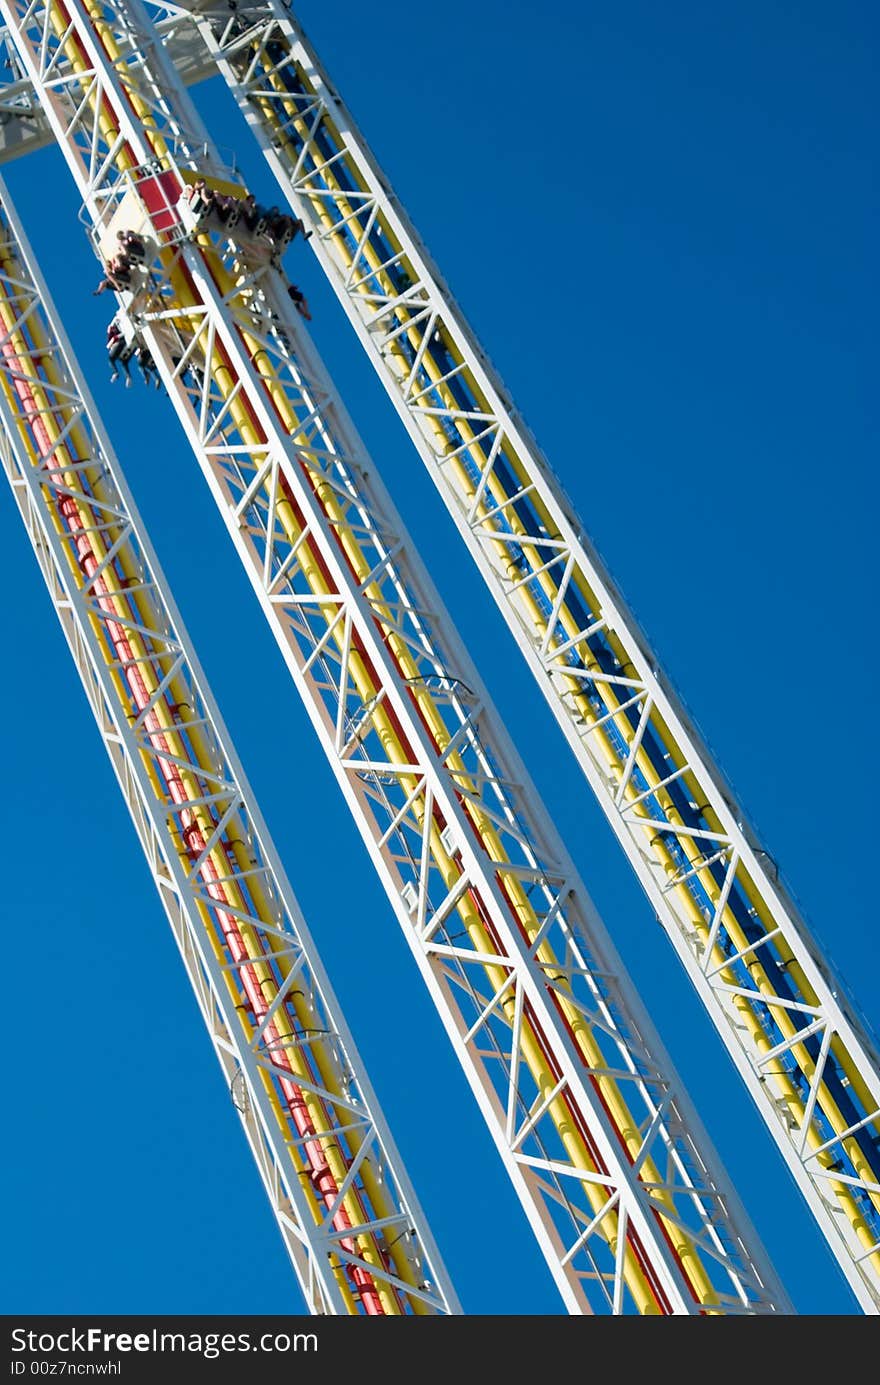 Sky Drop Ride at amusement park